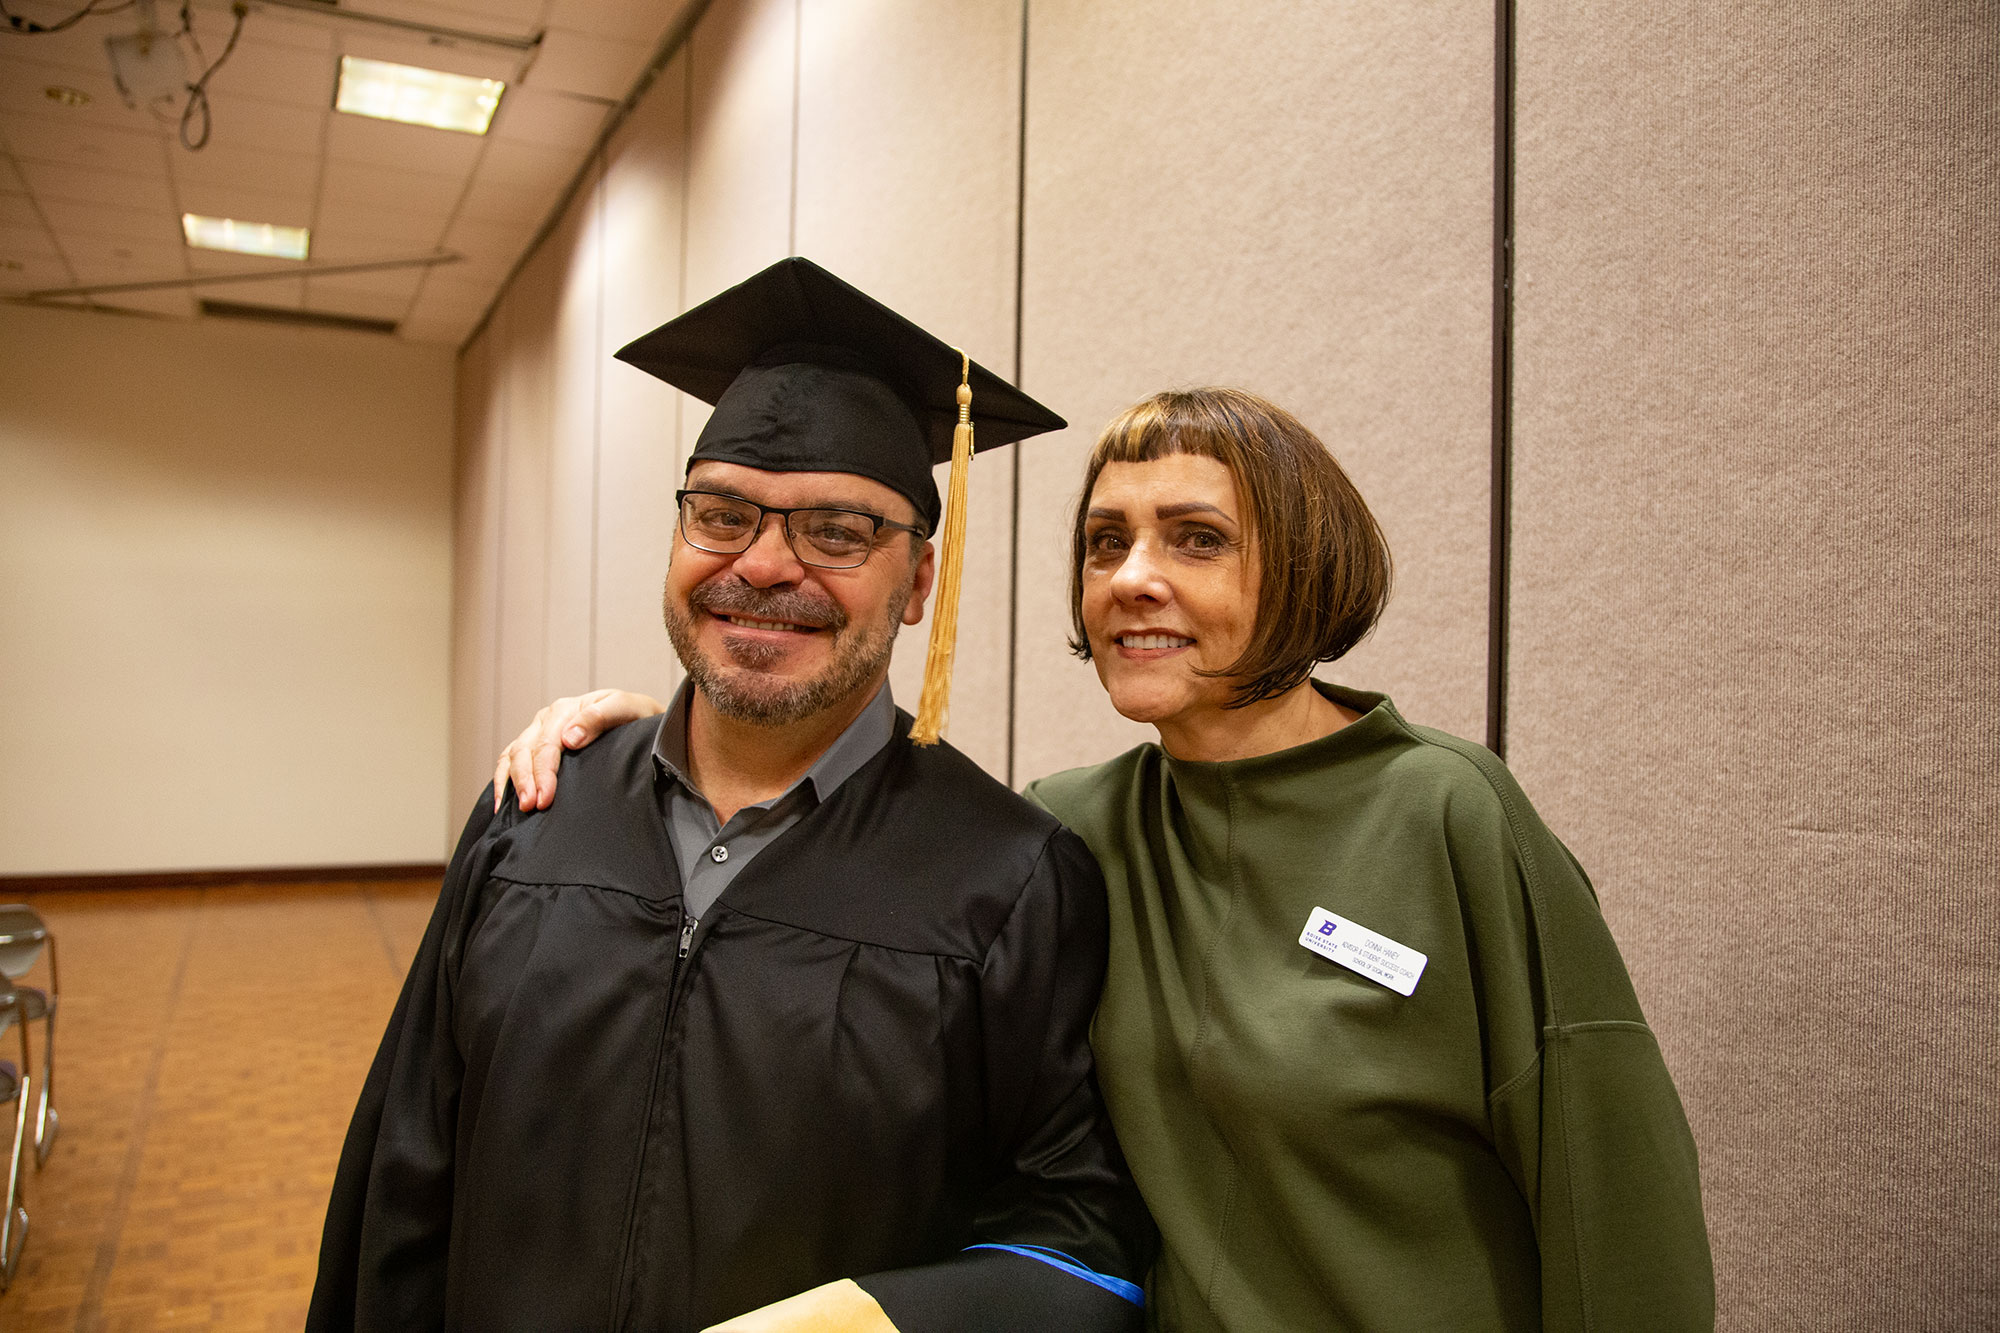 Wayne Brown at Graduation with advisor, Donna Haney